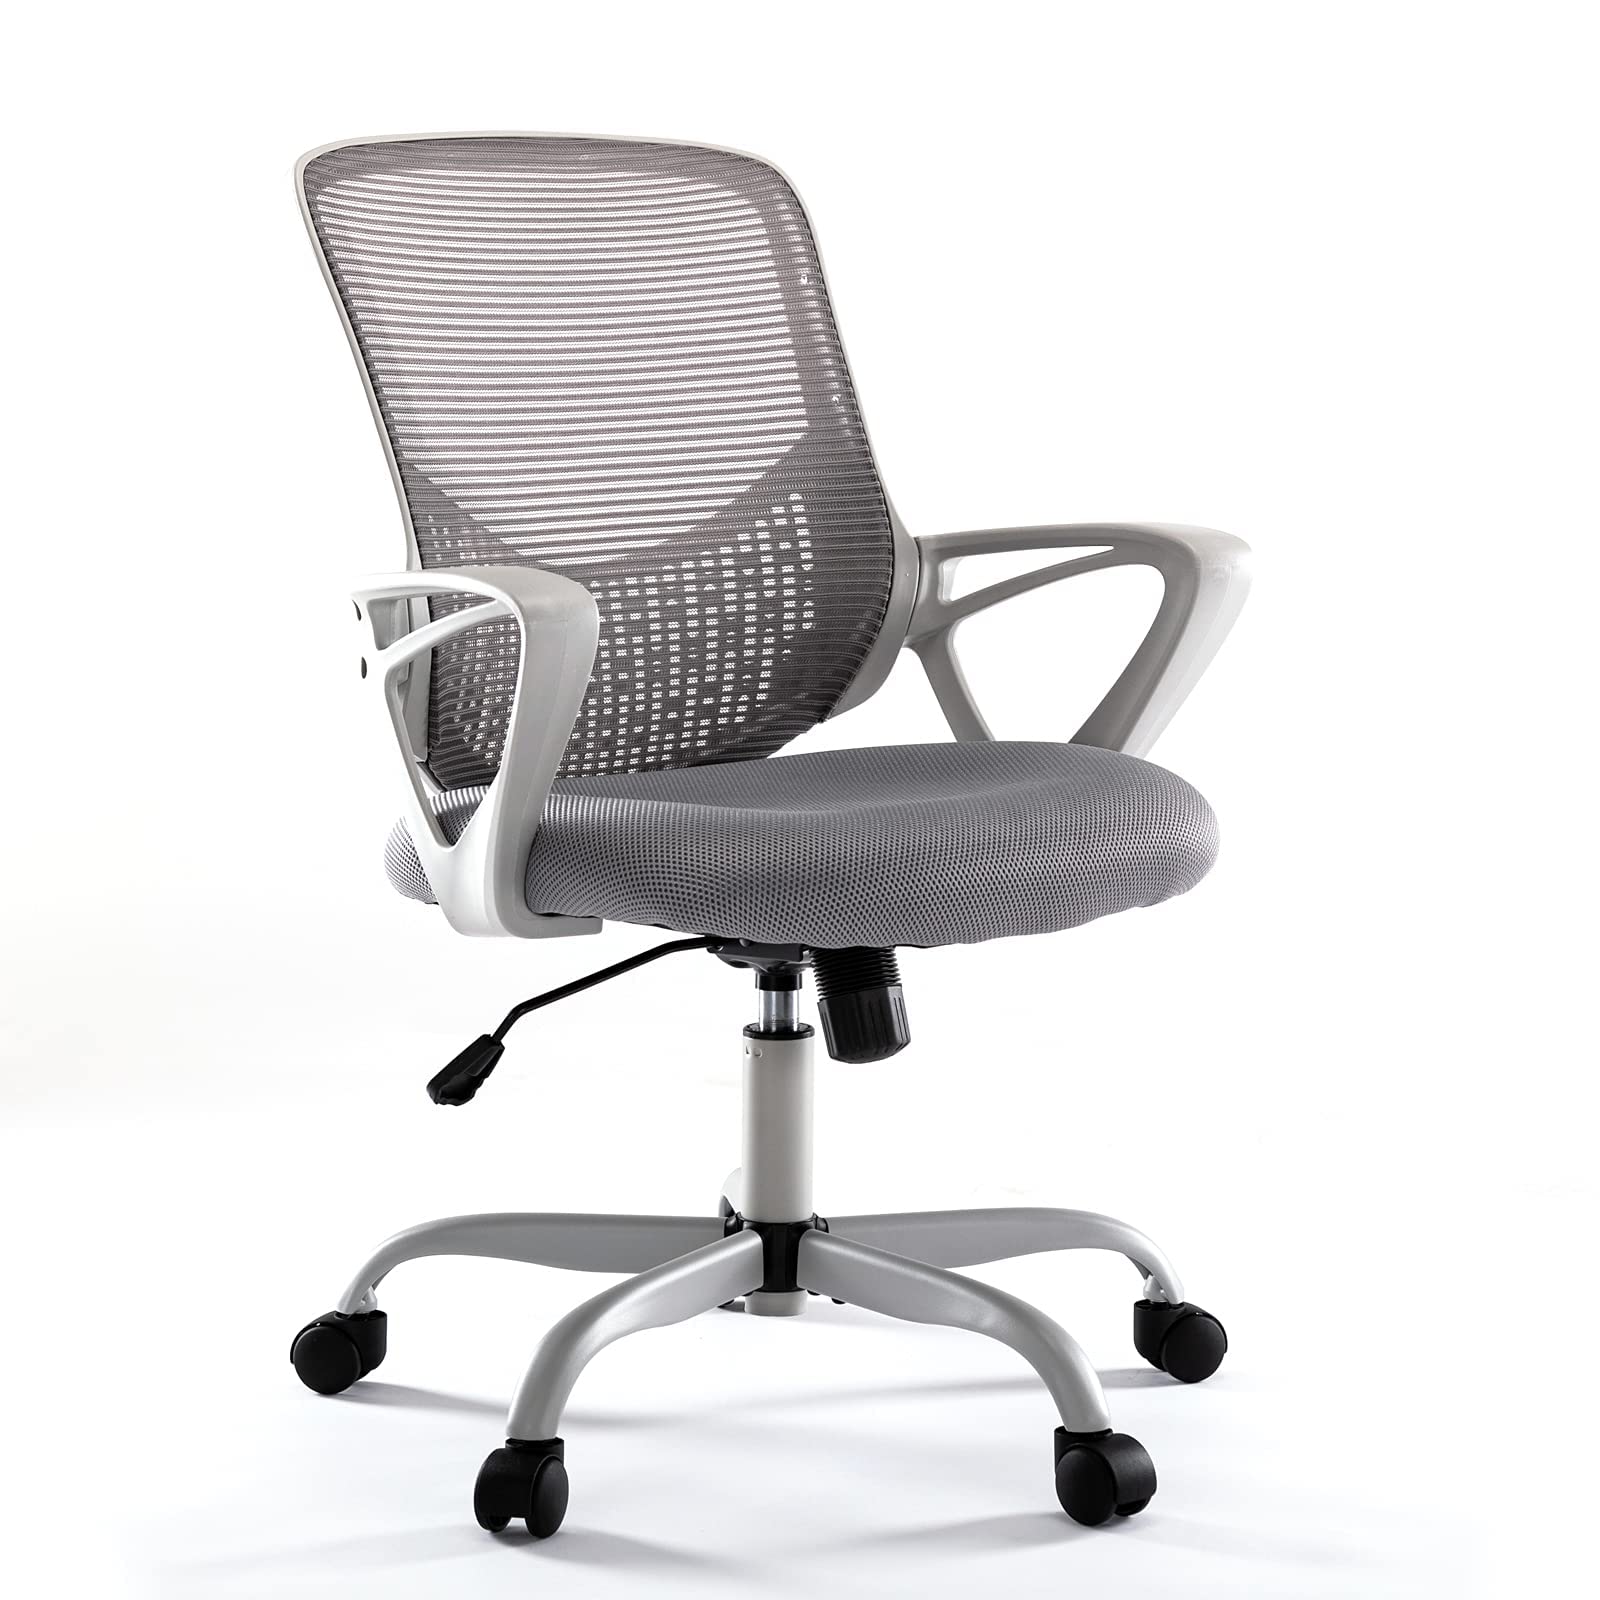 Smug Home Office Ergonomic Computer Desk Mesh Chair Adjustable Swivels w/ Armrest (Grey) $40.21 + Free Shipping